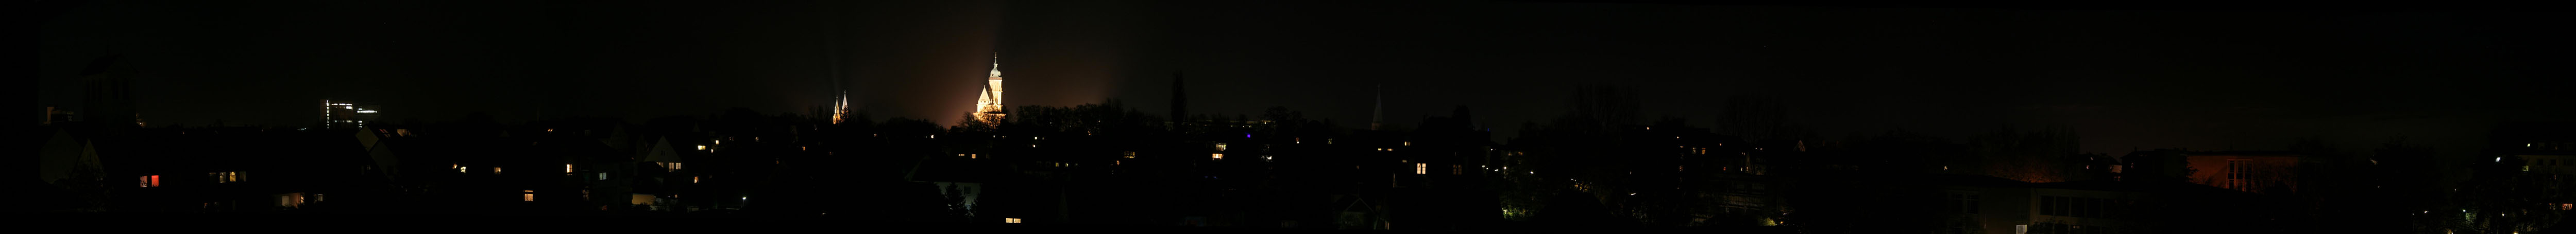 panorama-nacht_klein